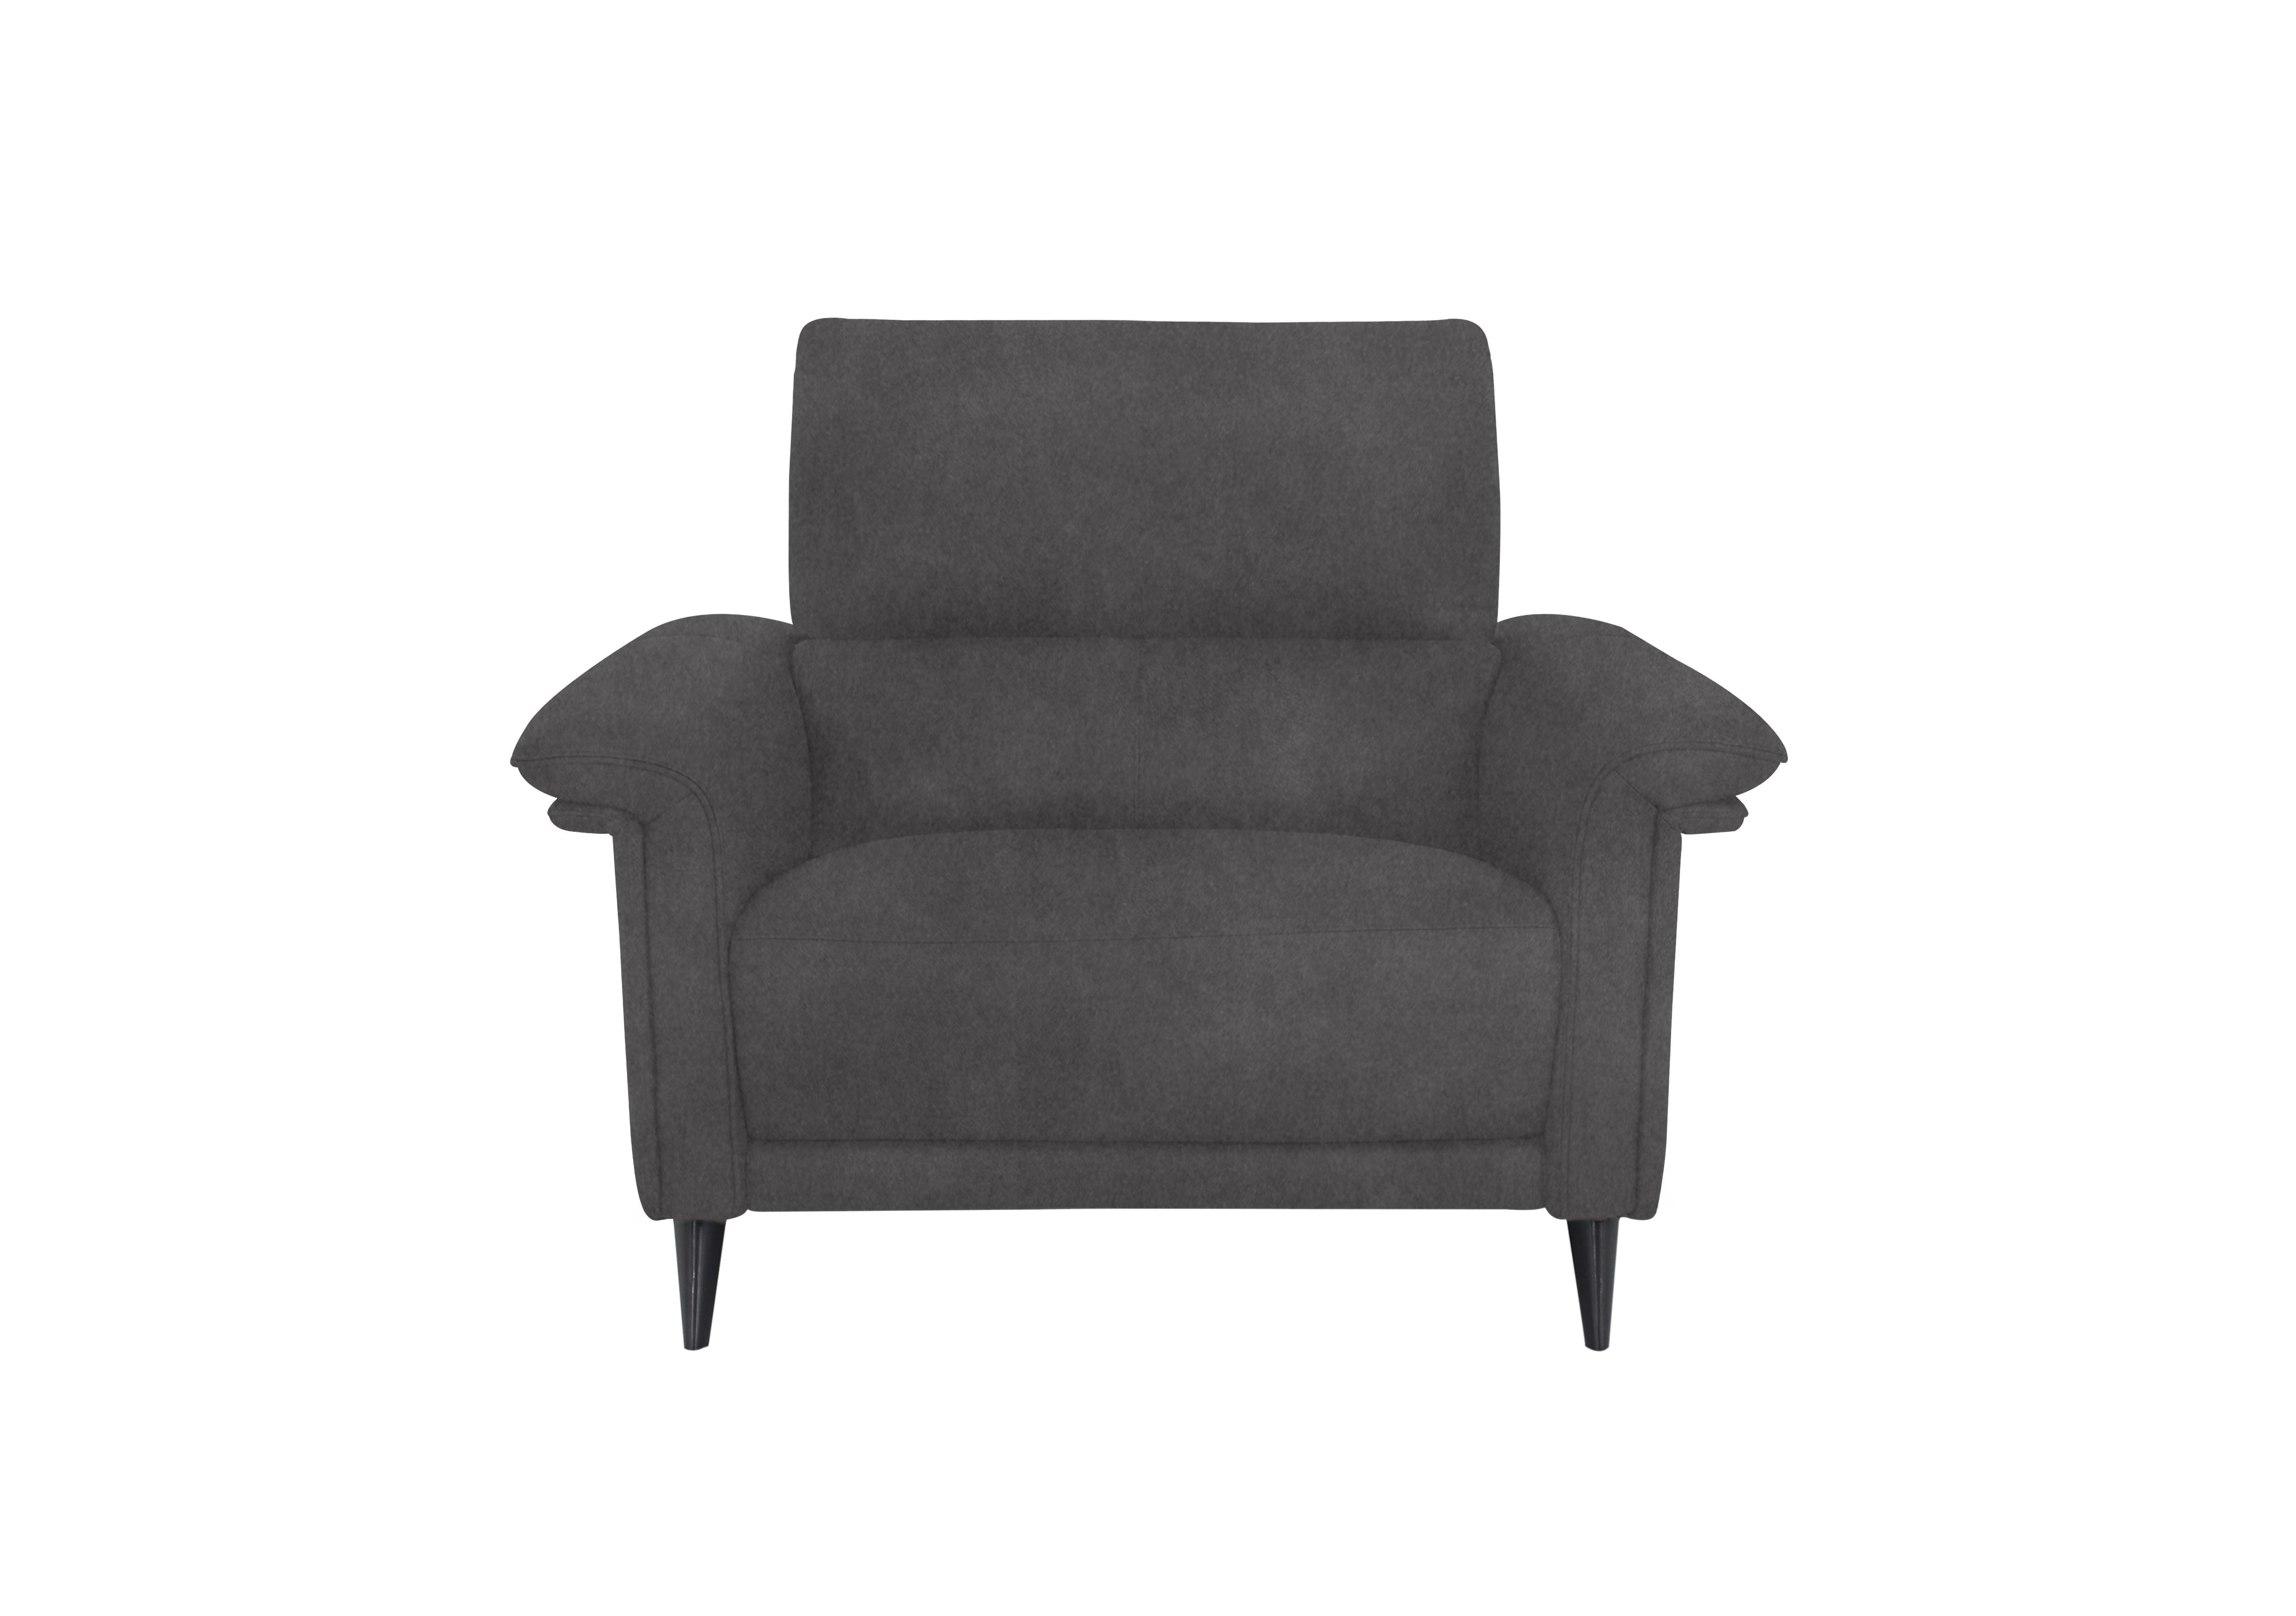 Huxley Fabric Chair in Fab-Meg-R20 Pewter on Furniture Village